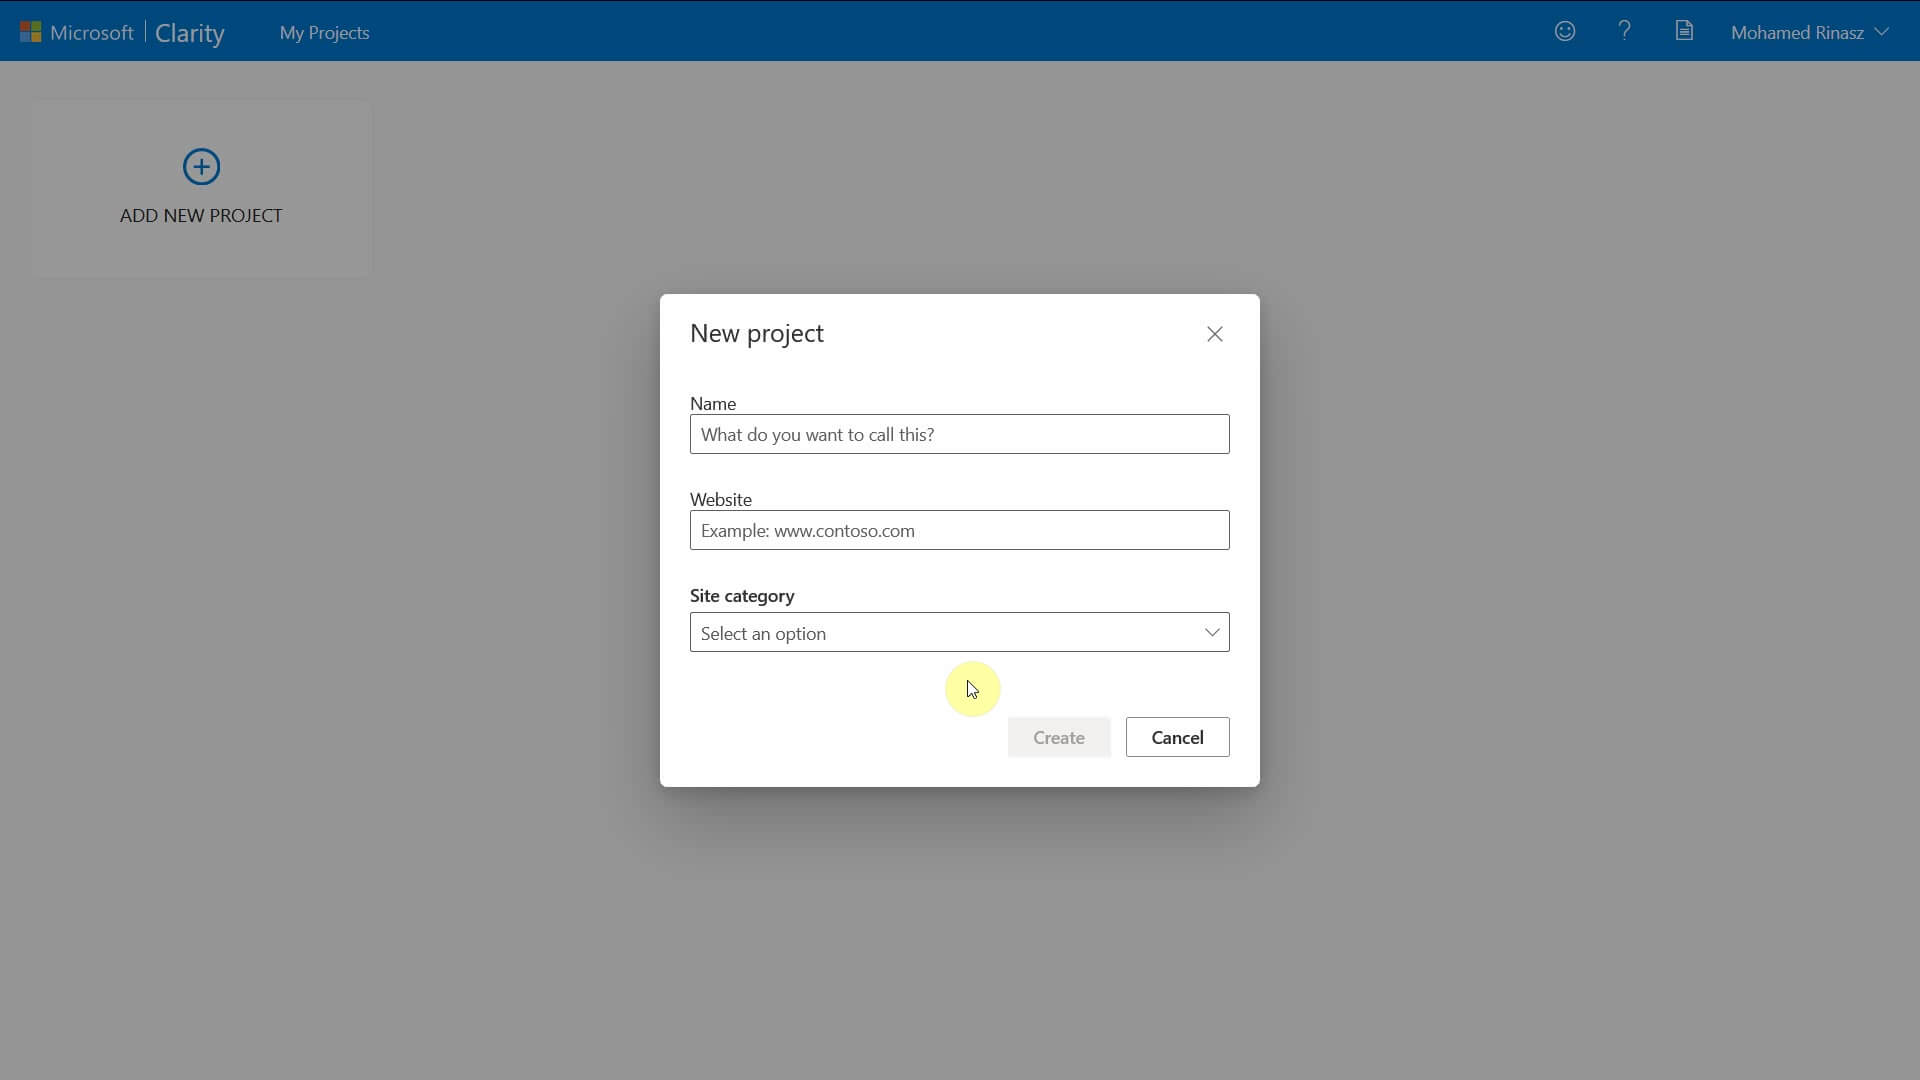 Microsoft Clarity - Add a new project